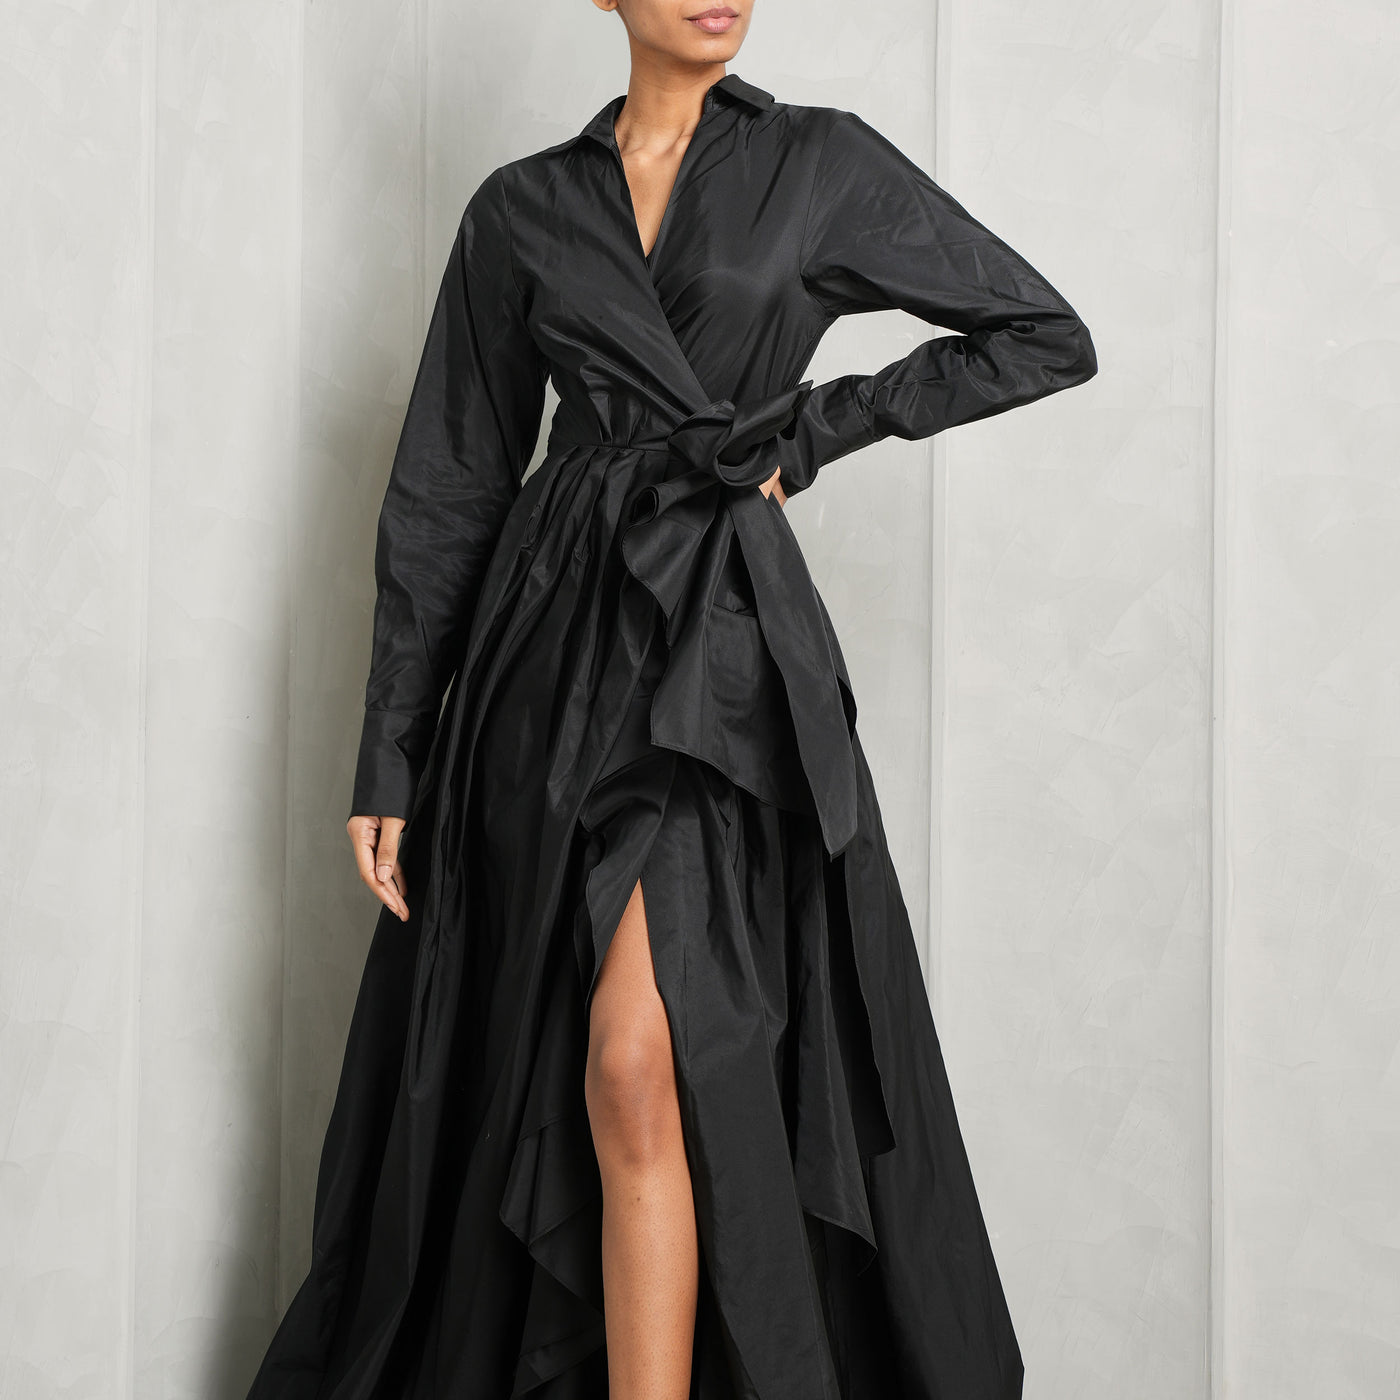 ALEXIS black ollie coat dress